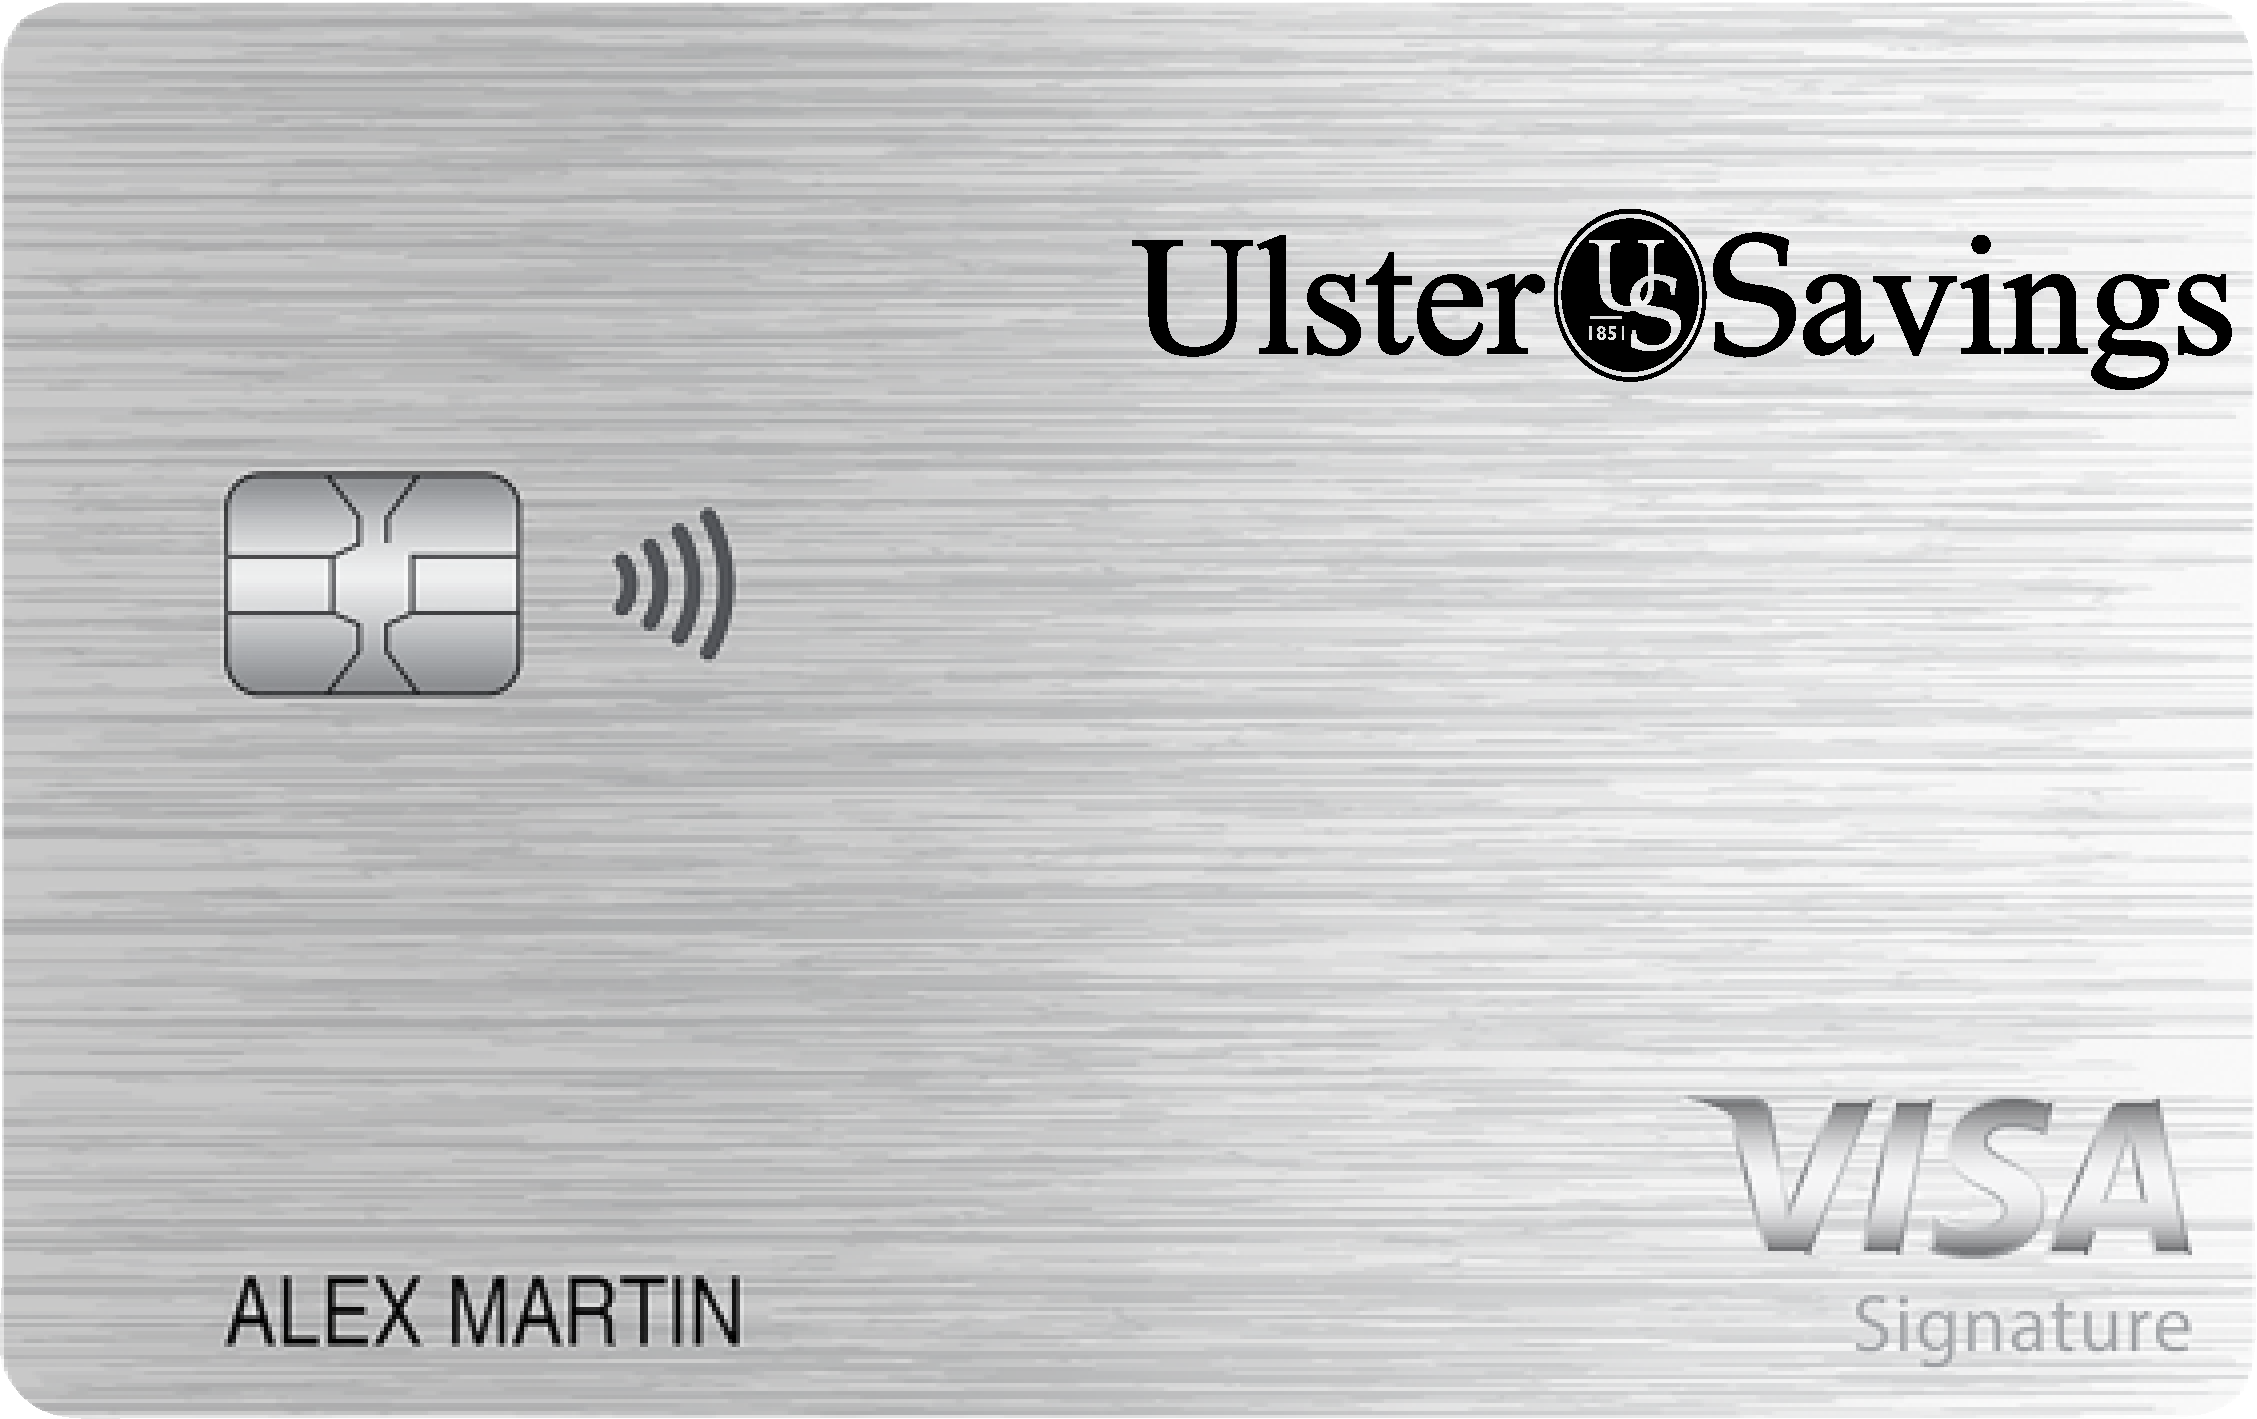 Ulster Savings Bank Max Cash Preferred Card